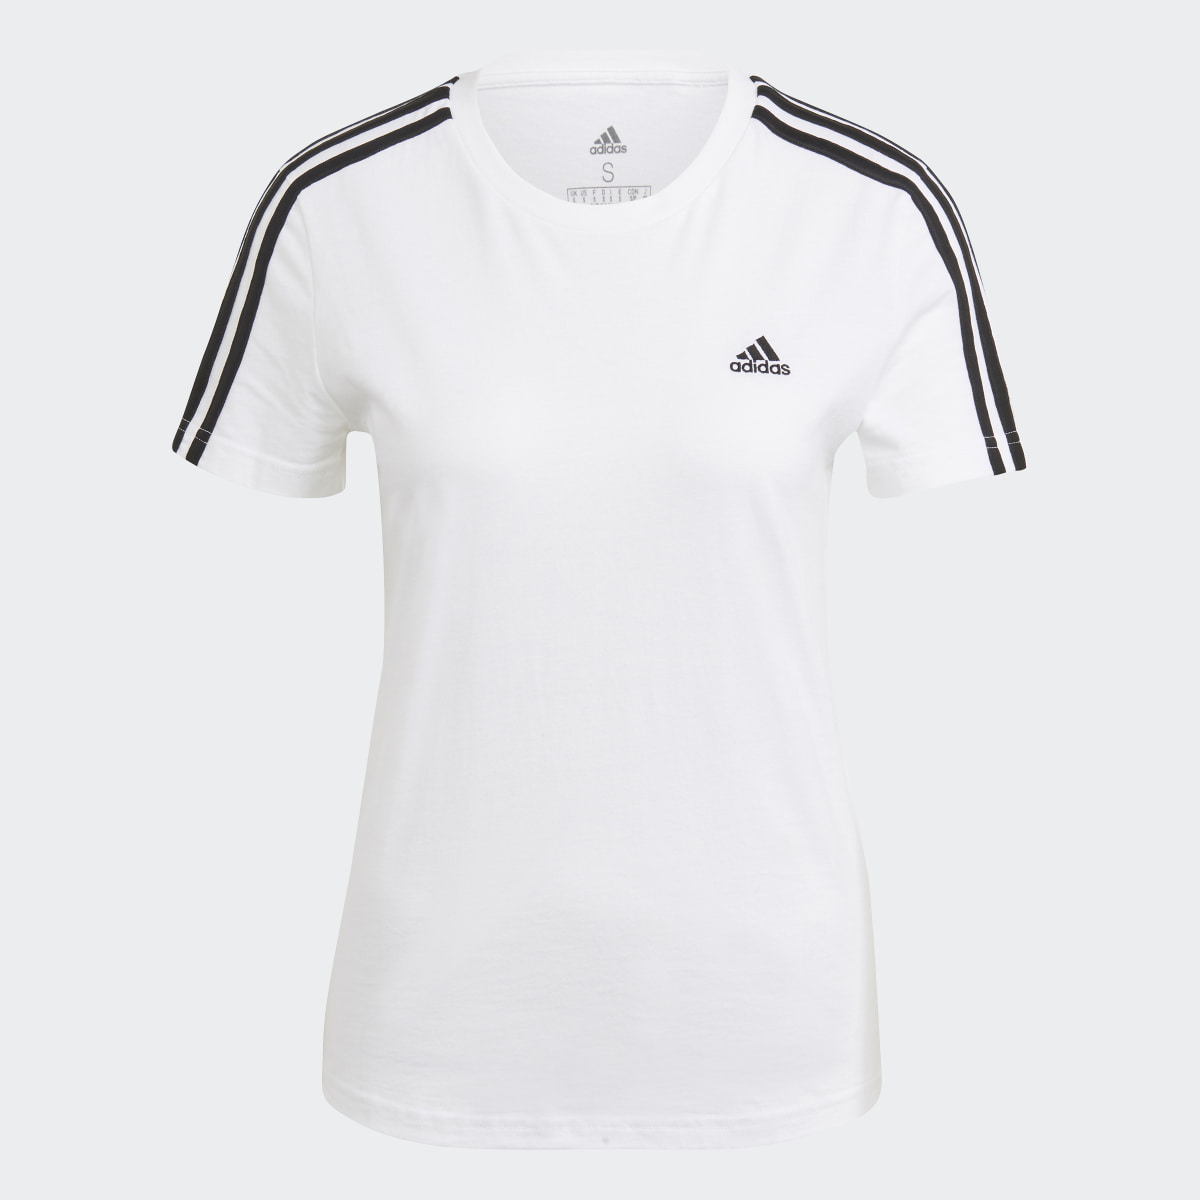 Adidas T-shirt LOUNGEWEAR Essentials Slim 3-Stripes. 5